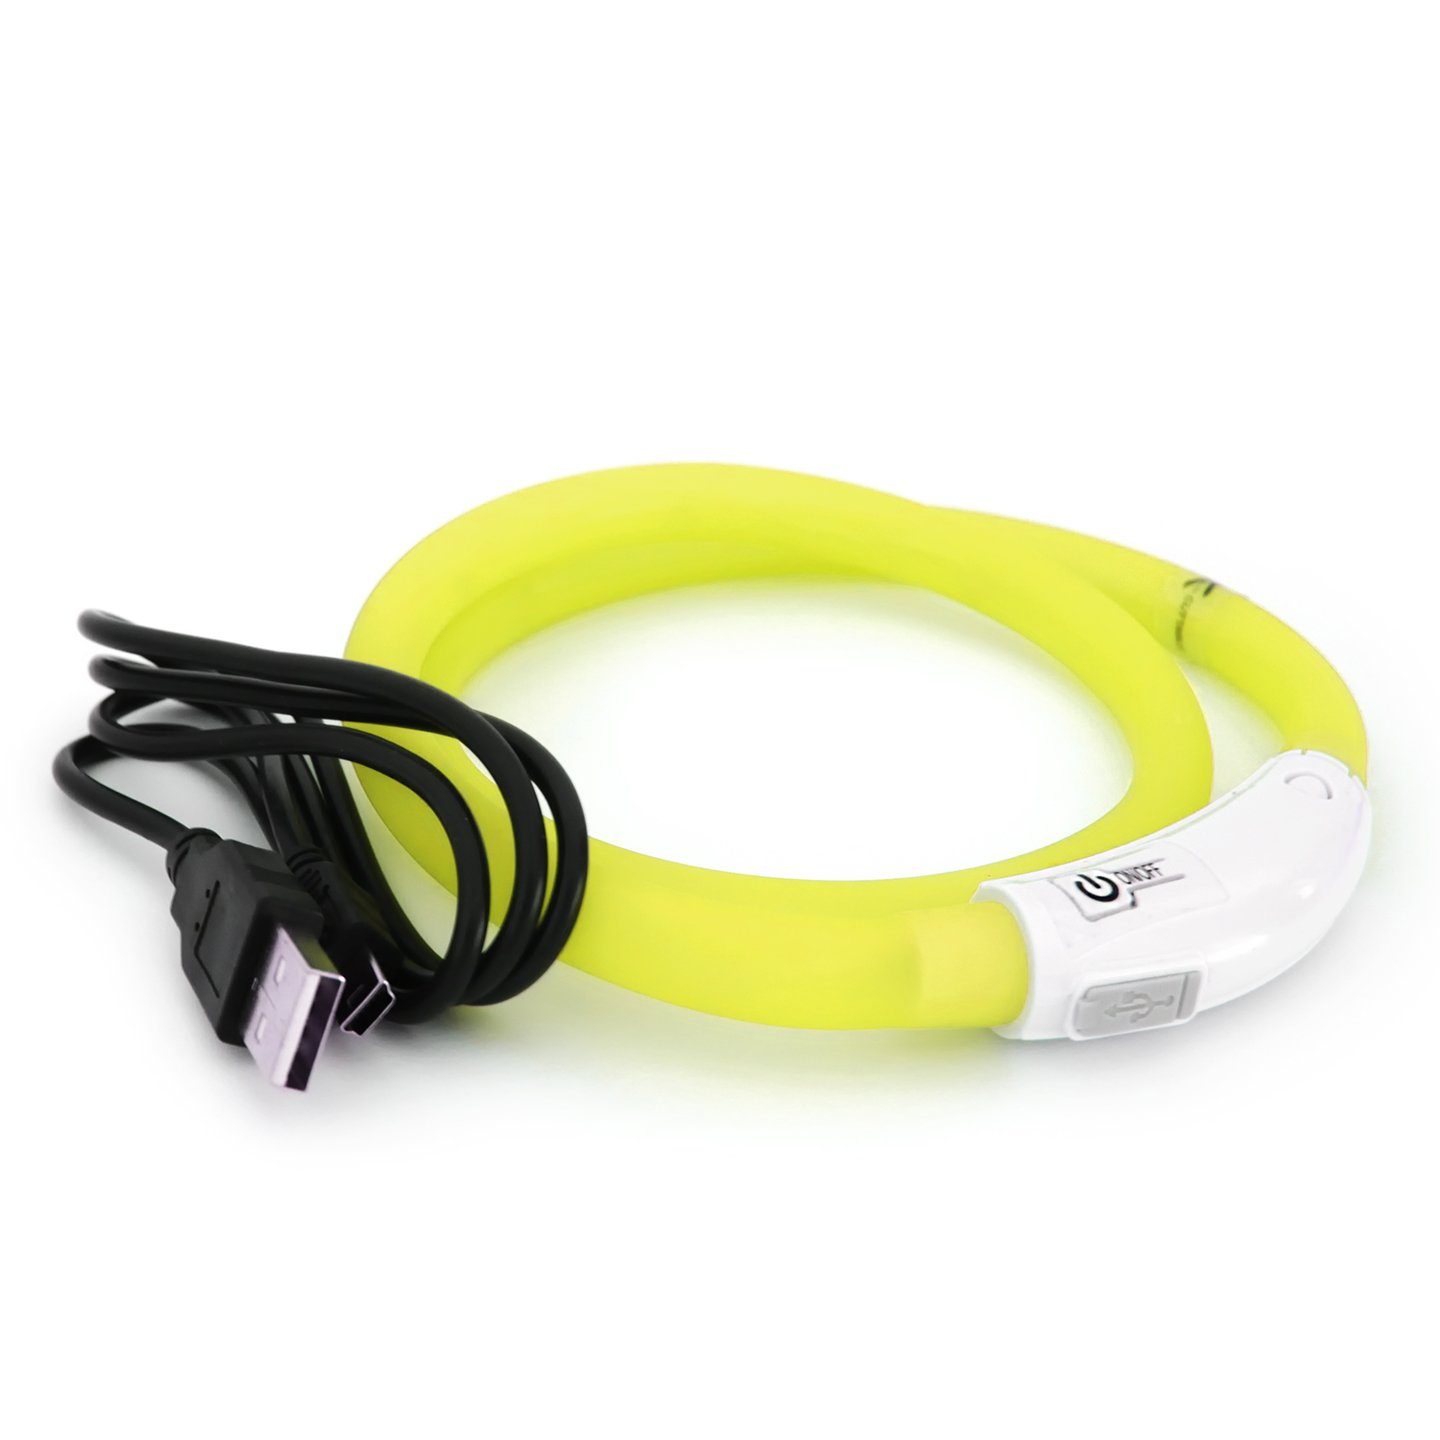 PRECORN Hunde-Halsband LED Silikon Hunde Leuchthalsband aufladbar per USB indiv. kürzbar, Silikon